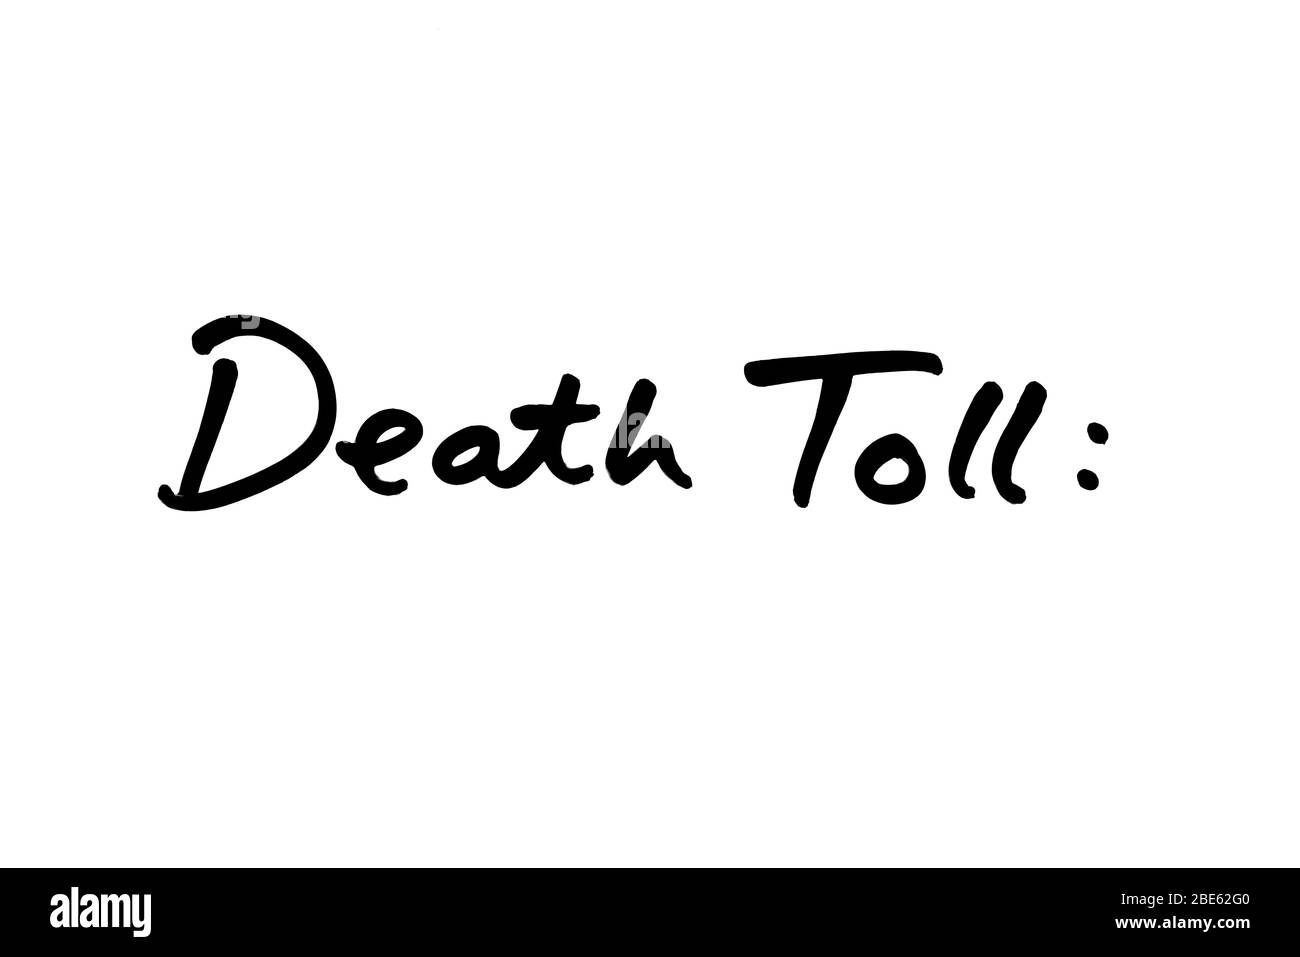 Death Toll handwritten on a white background. Stock Photo